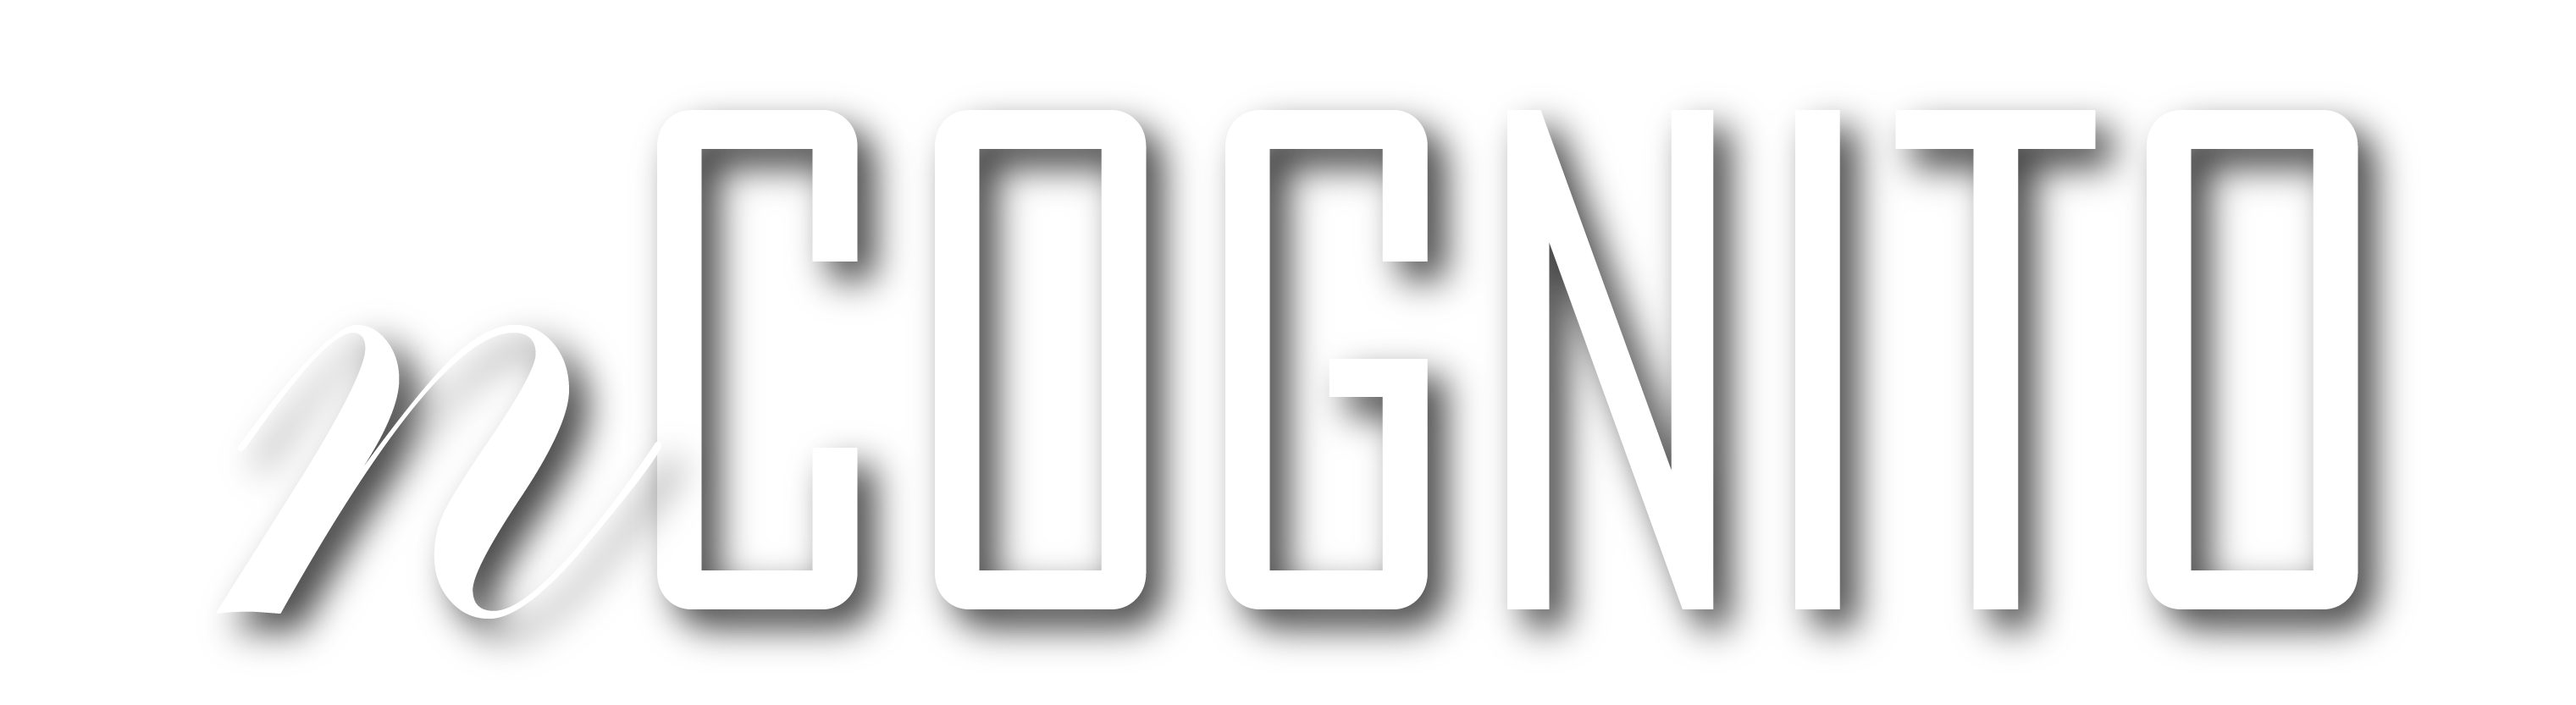 main logo ncognito folyóirat